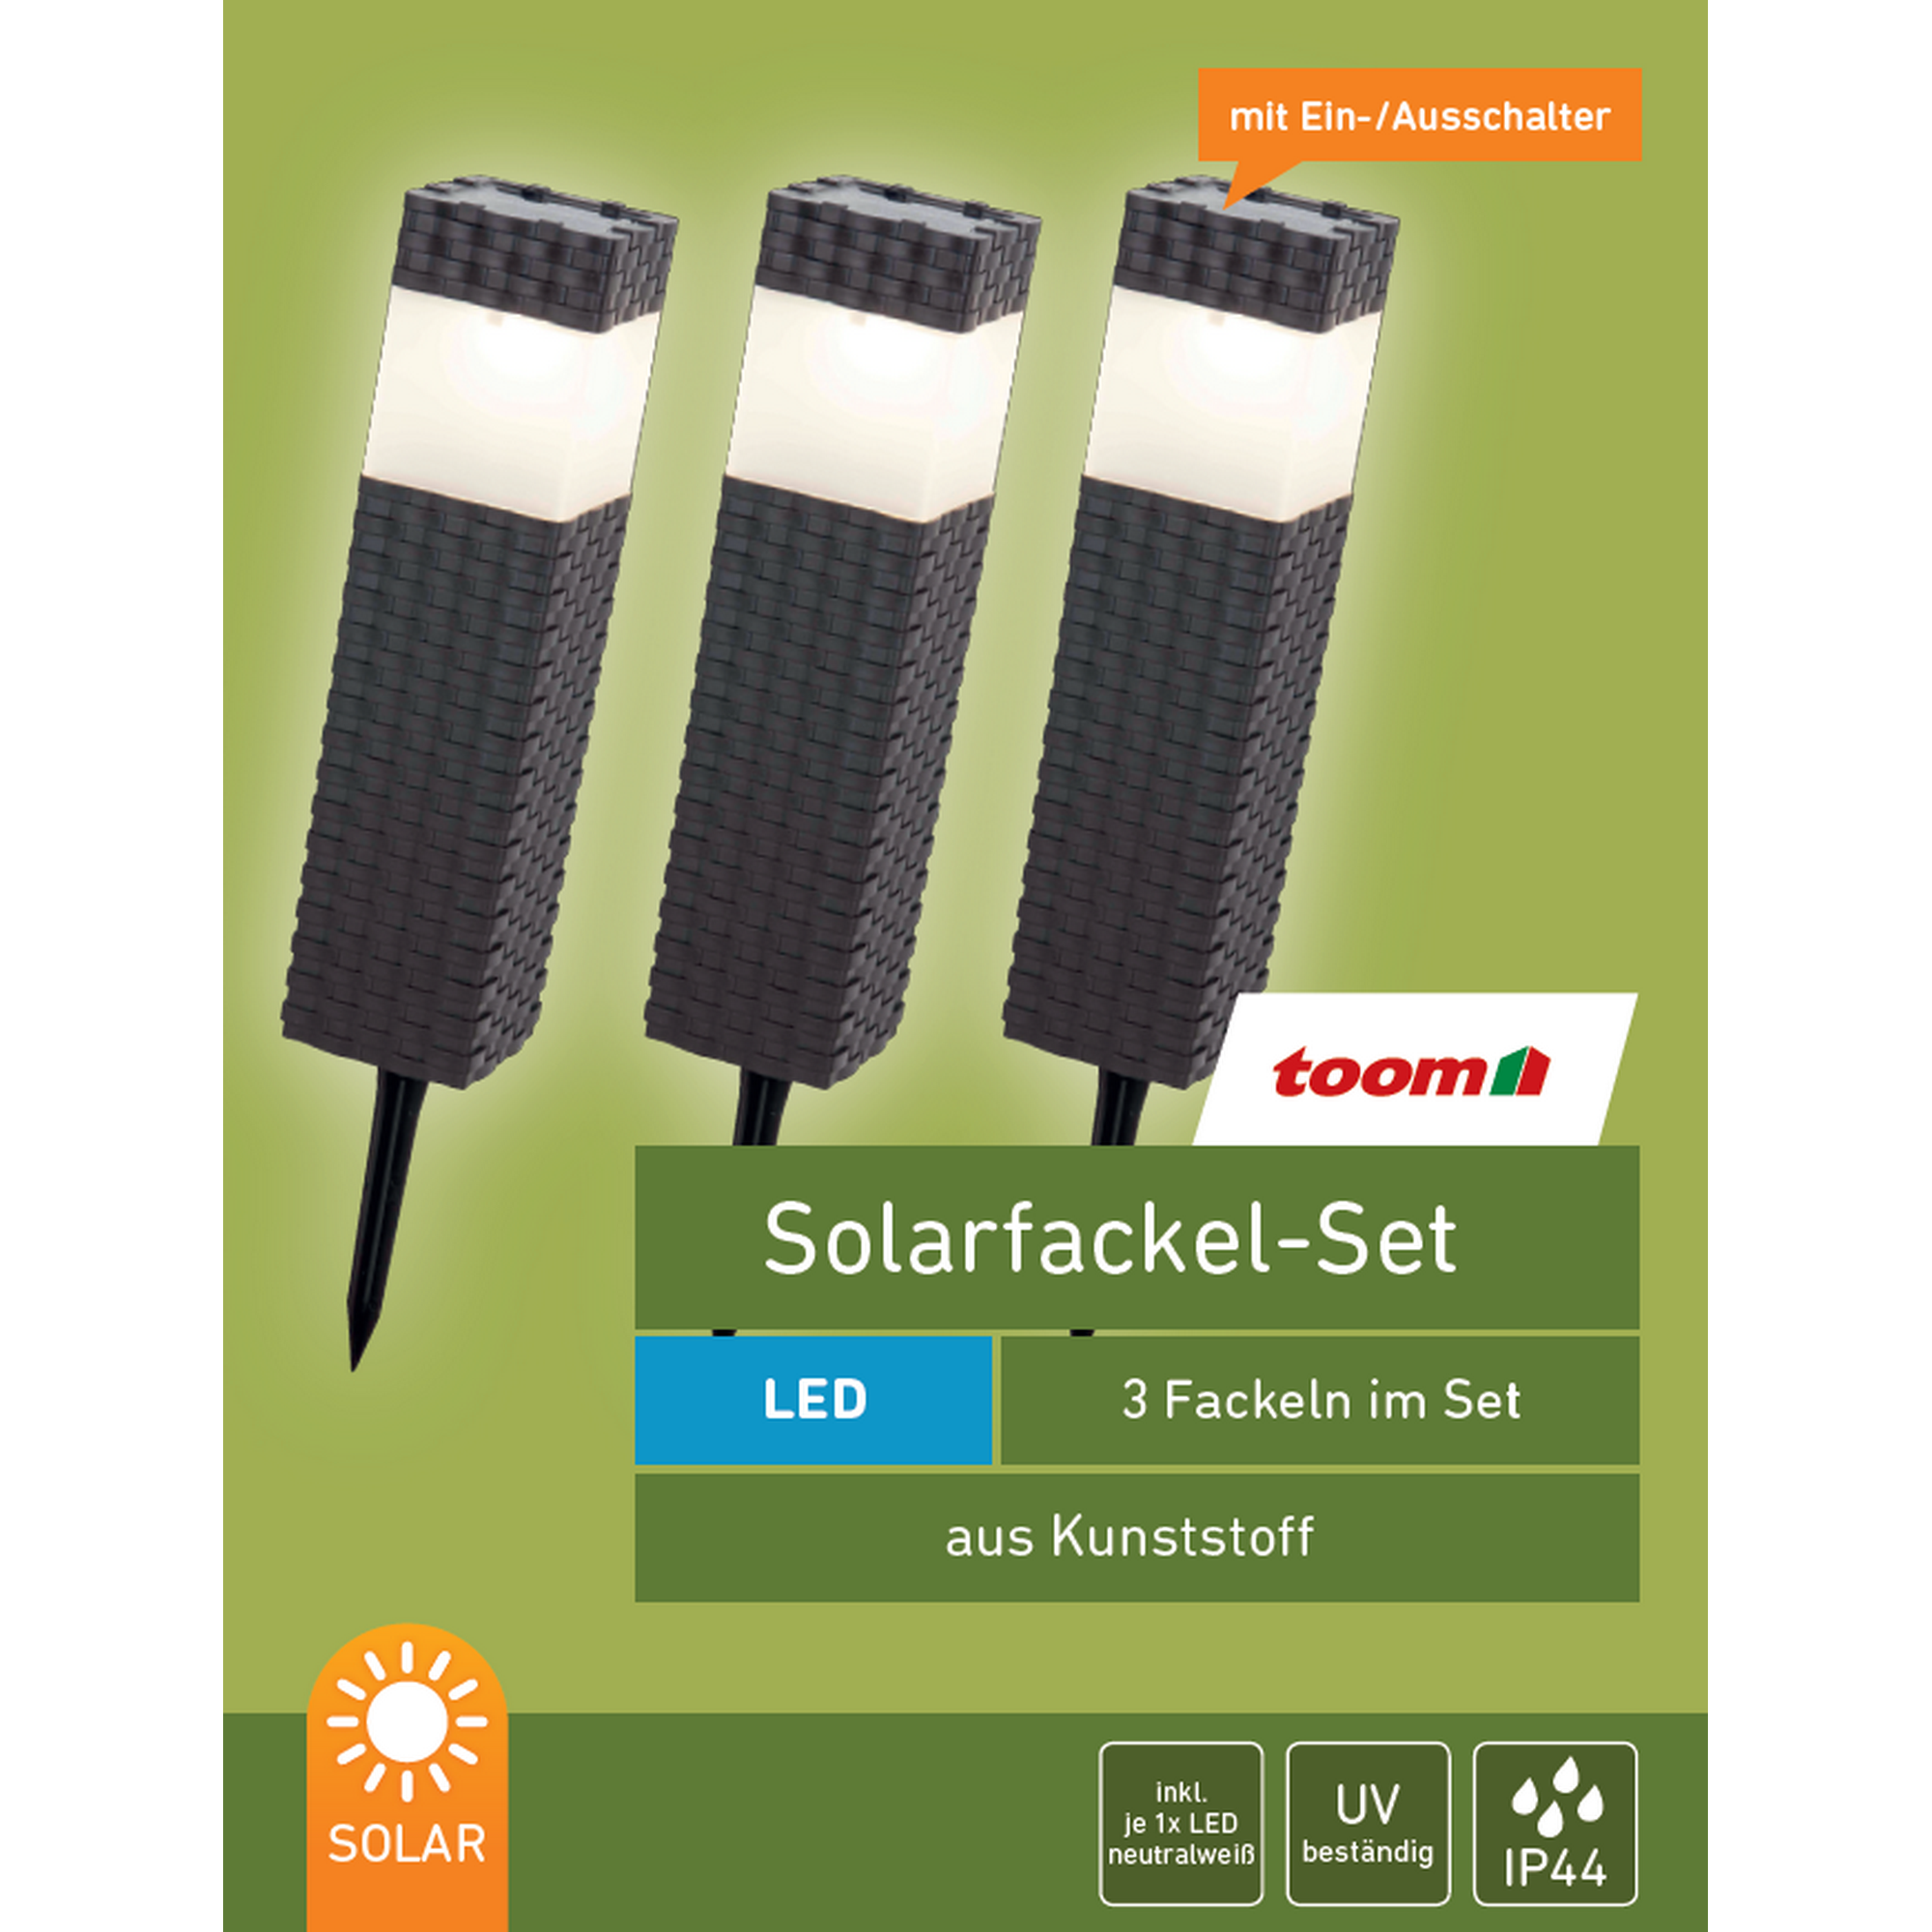 LED-Solarfackel-Set braun 38 cm, 3 Stück + product picture